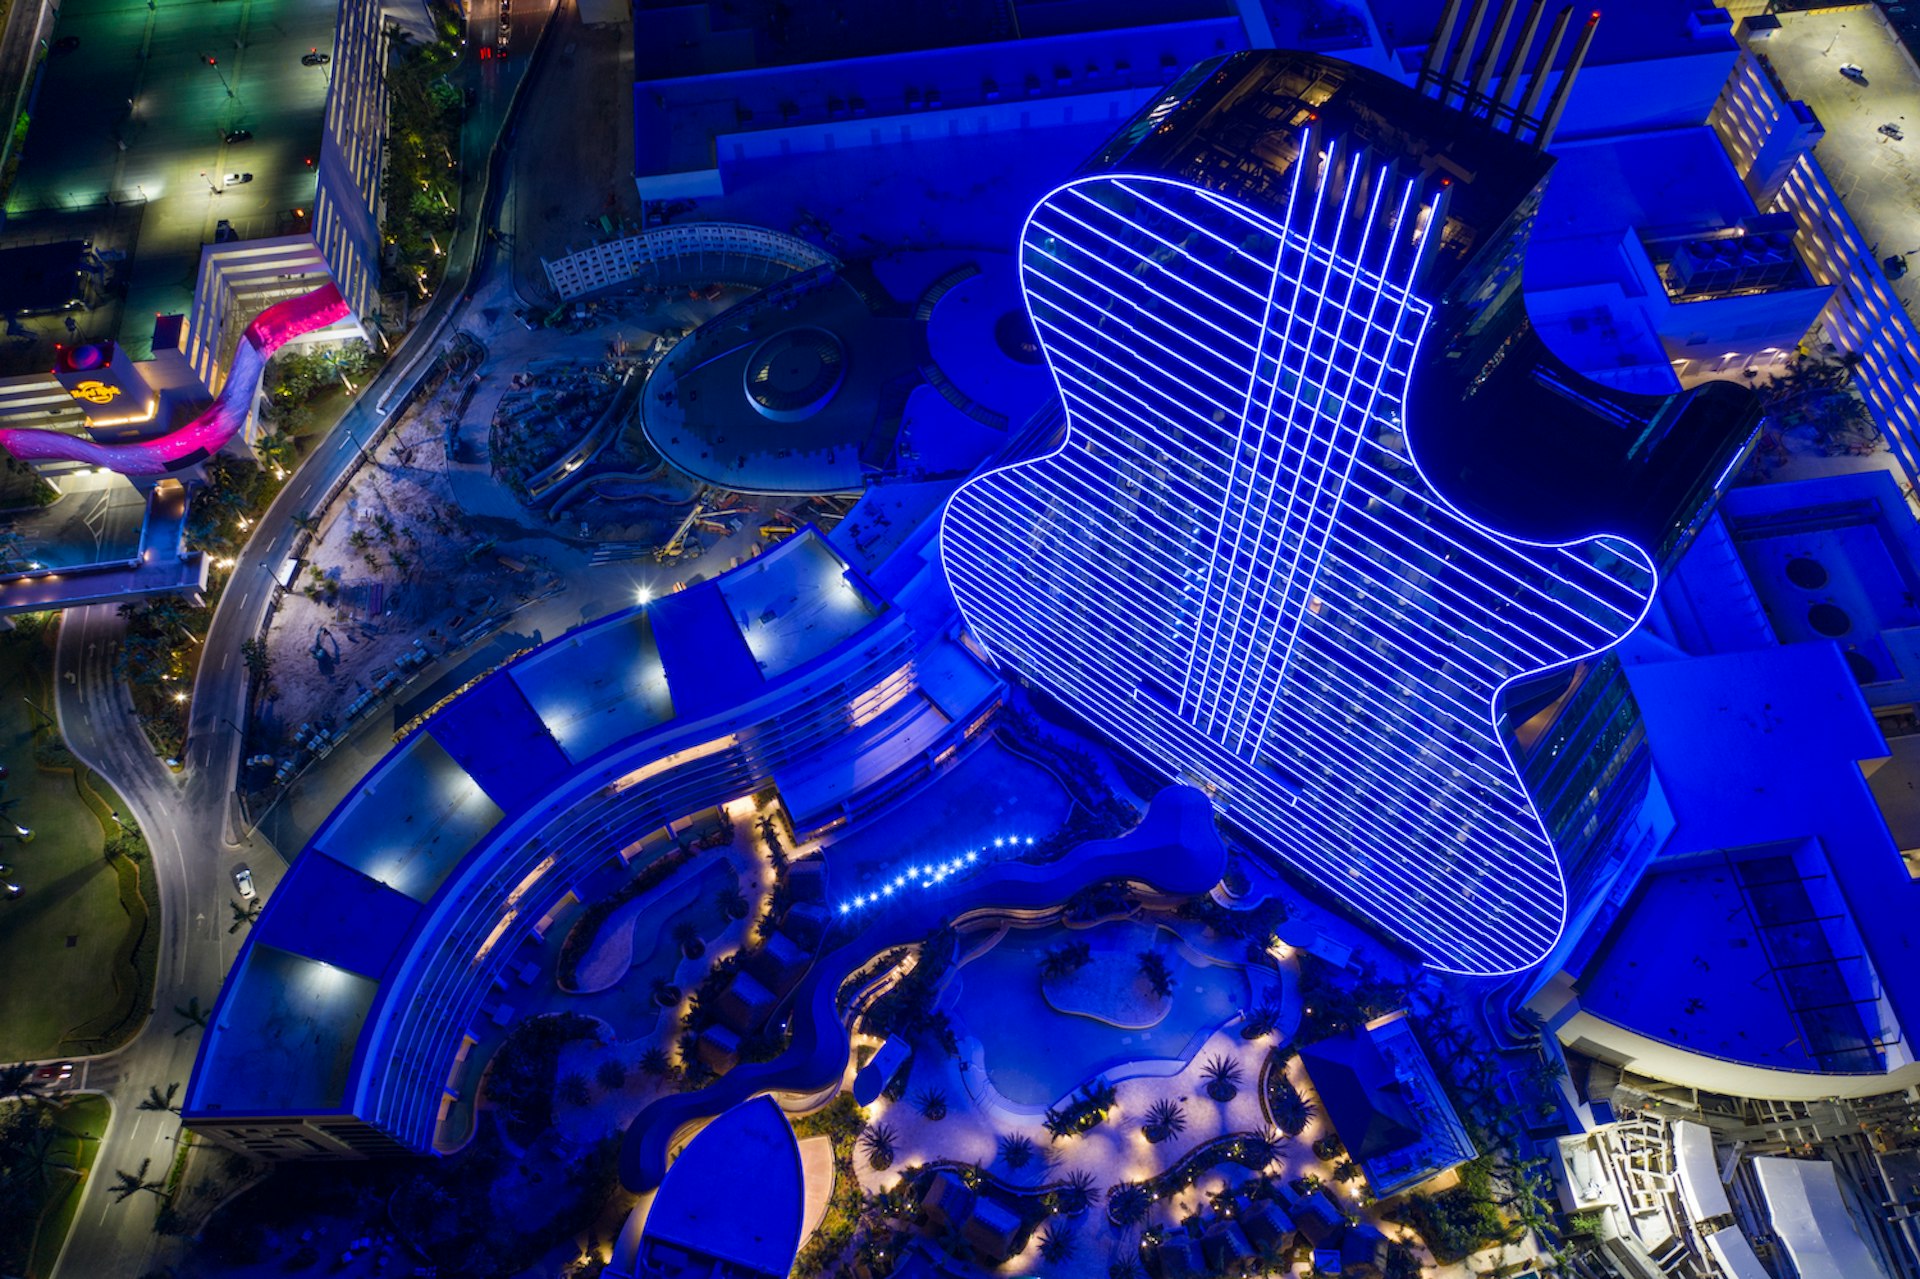 An aerial drone photo of the guitar-shaped Seminole Hard Rock Hotel & Casino illuminated in blue lights at night, Seminole, Florida, USA